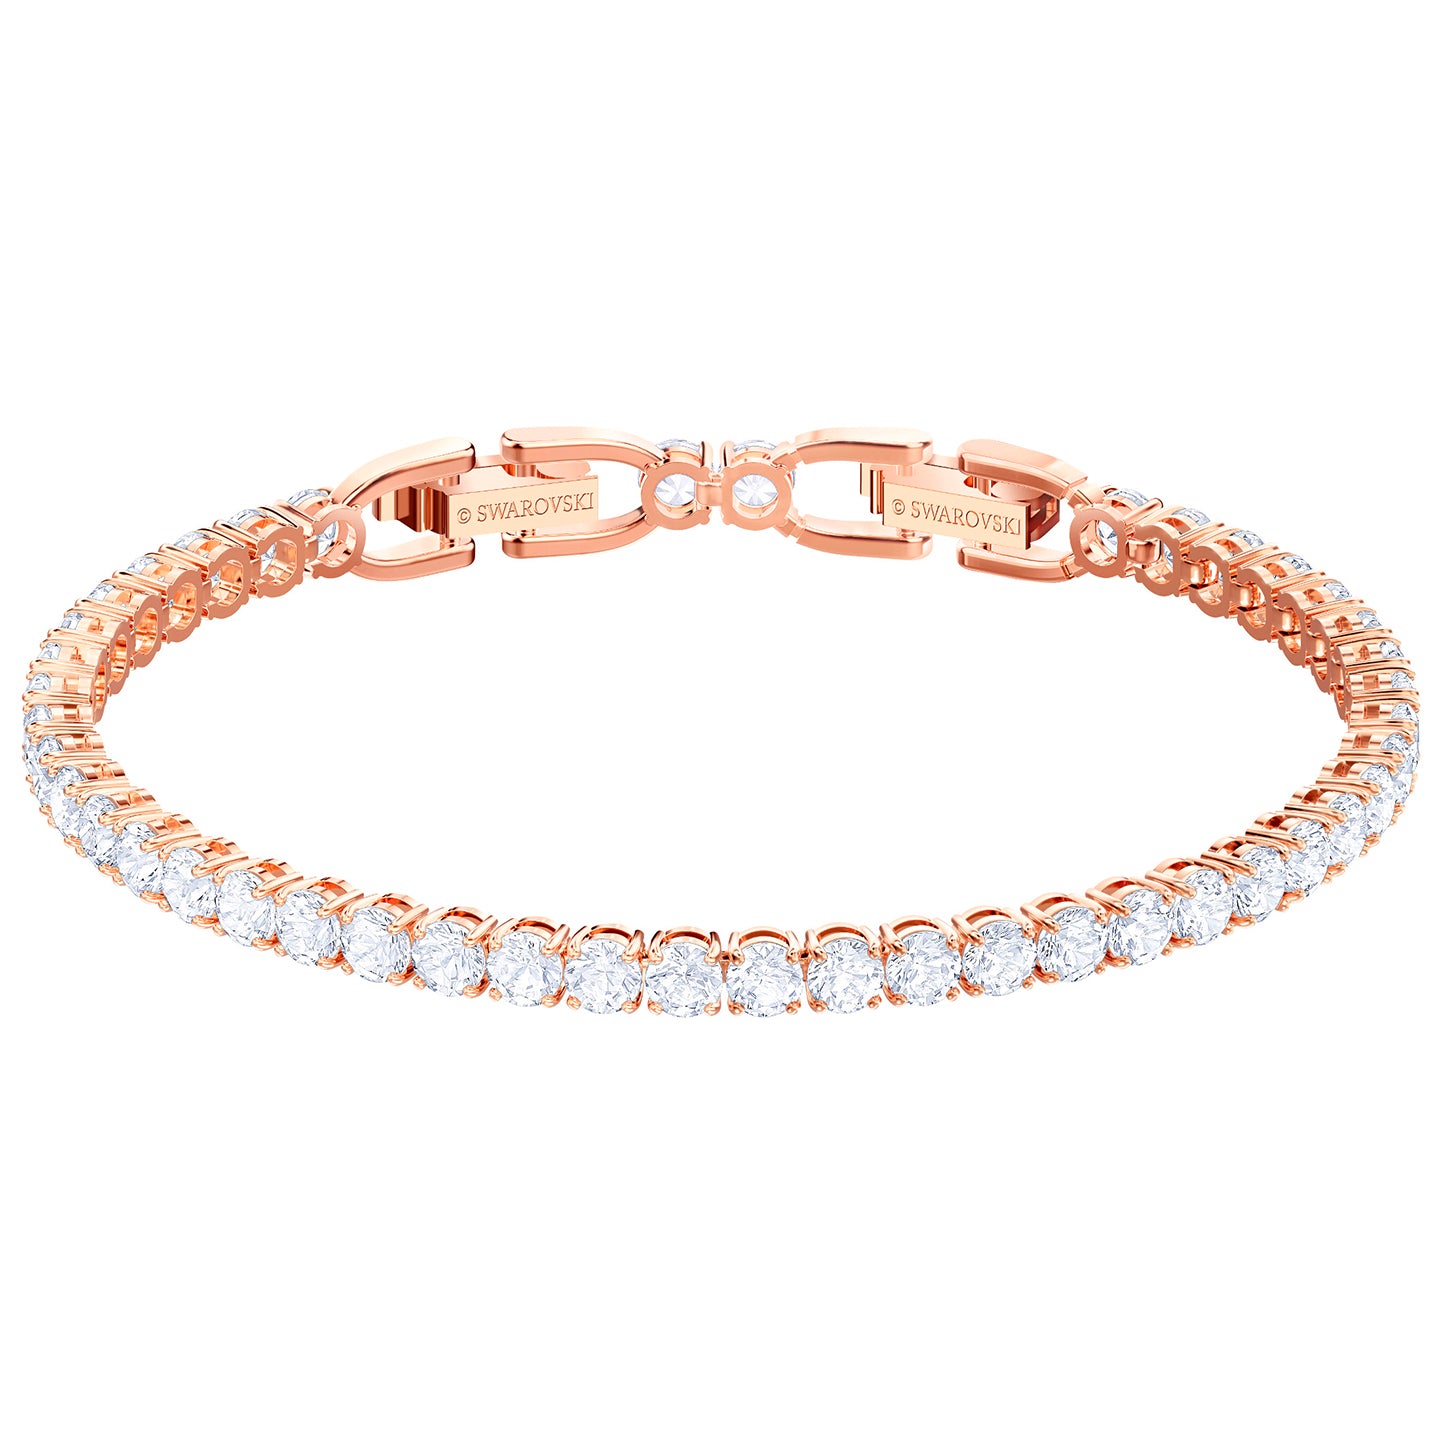 Swarovski Tennis Bracelet, White, Rose-gold tone plated 5464948